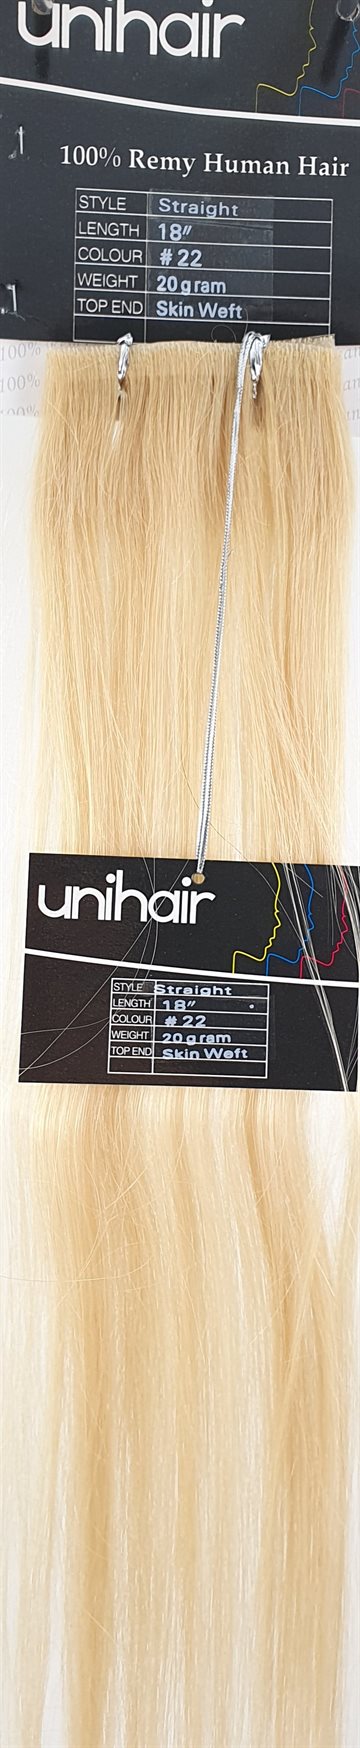 American Dream Human Hair - Skin Weft hair, color 22 - 18" (45 cm. length.)